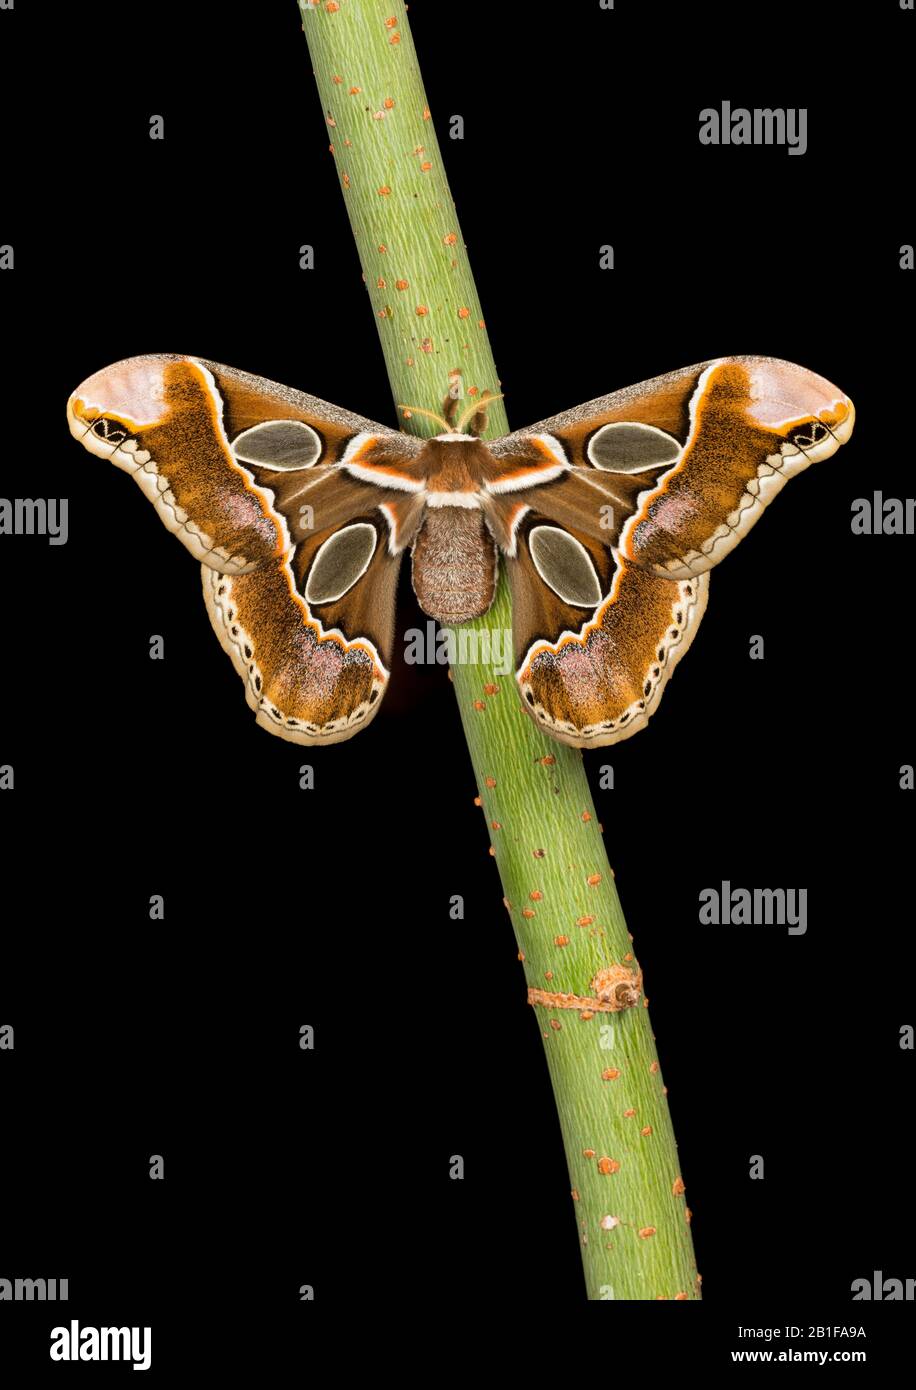 Lebeau's Rotchschildia (Rothschildia lebeau forbesi) aka Forbes' Silkmoth. Adult on box elder stem in Texas.  Wings display lilac dusting. Stock Photo